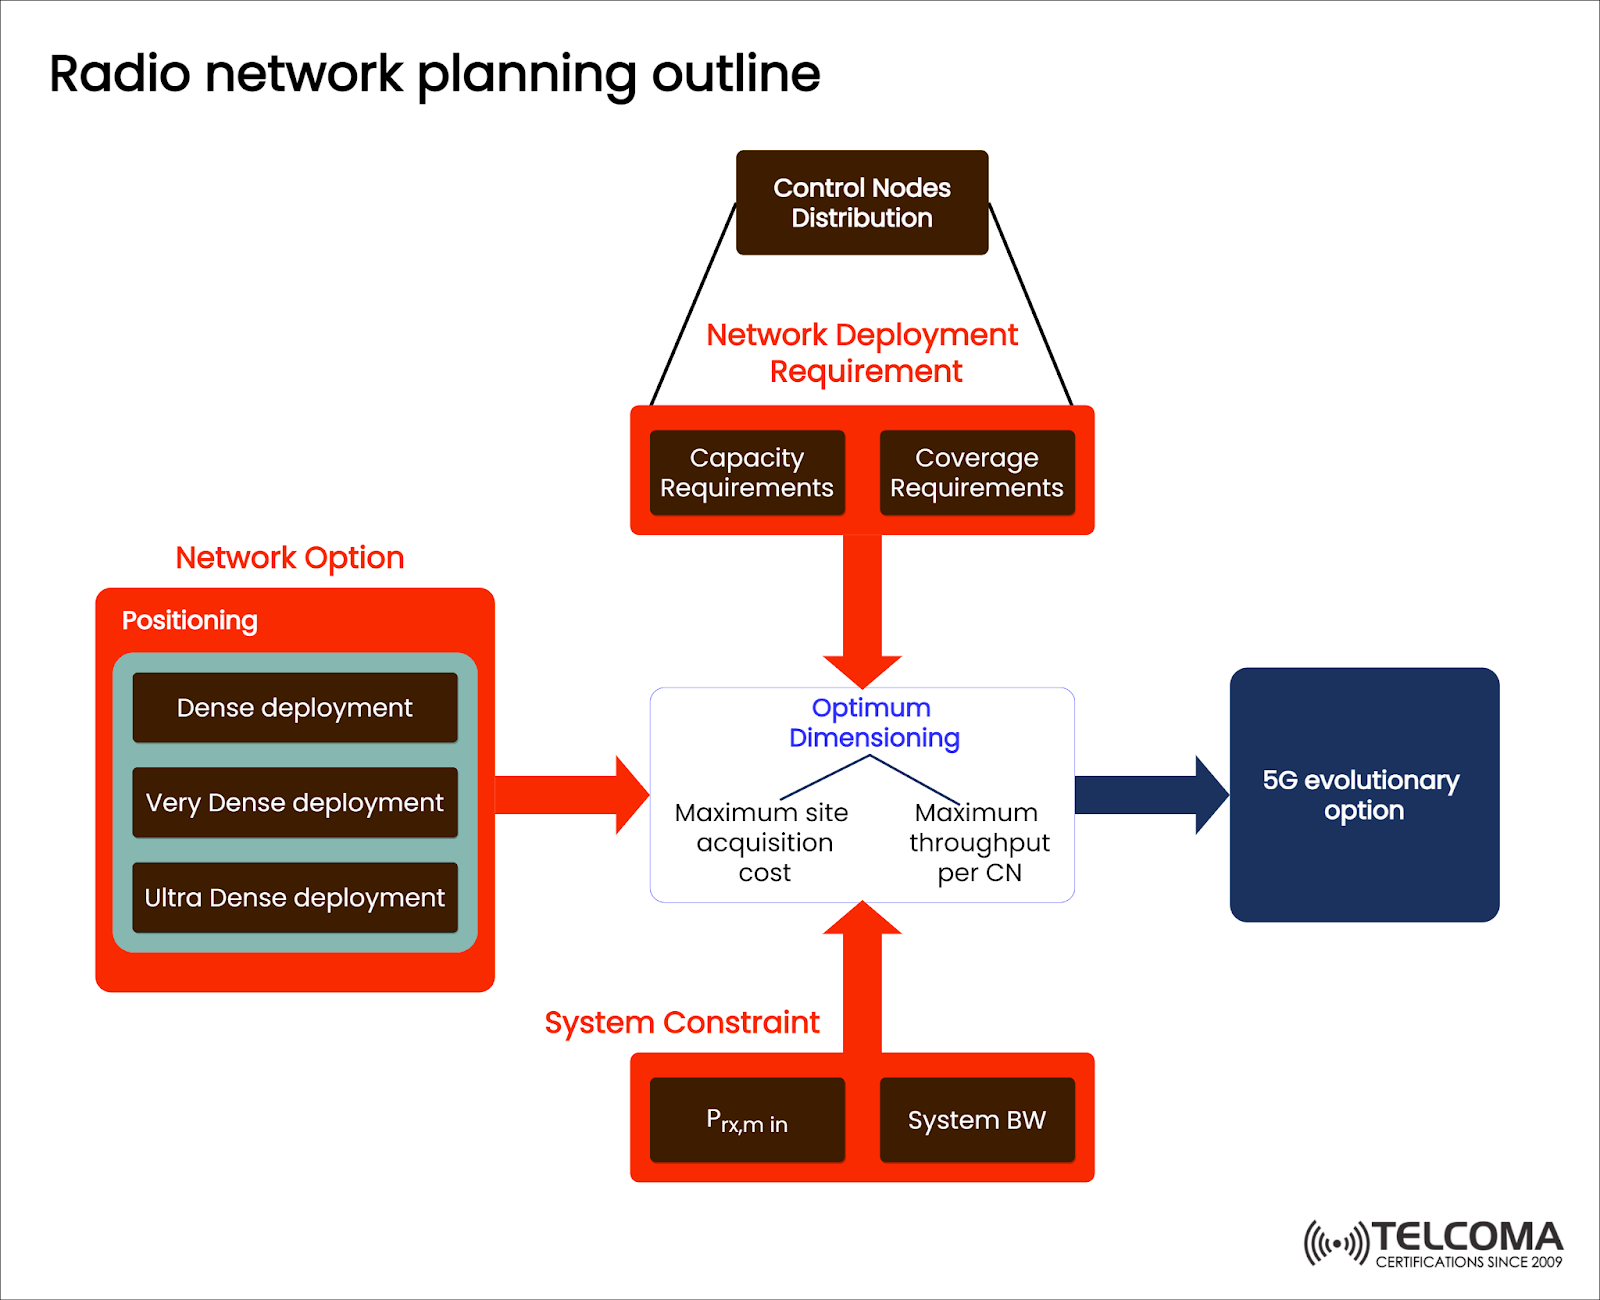 Radio network planning outline